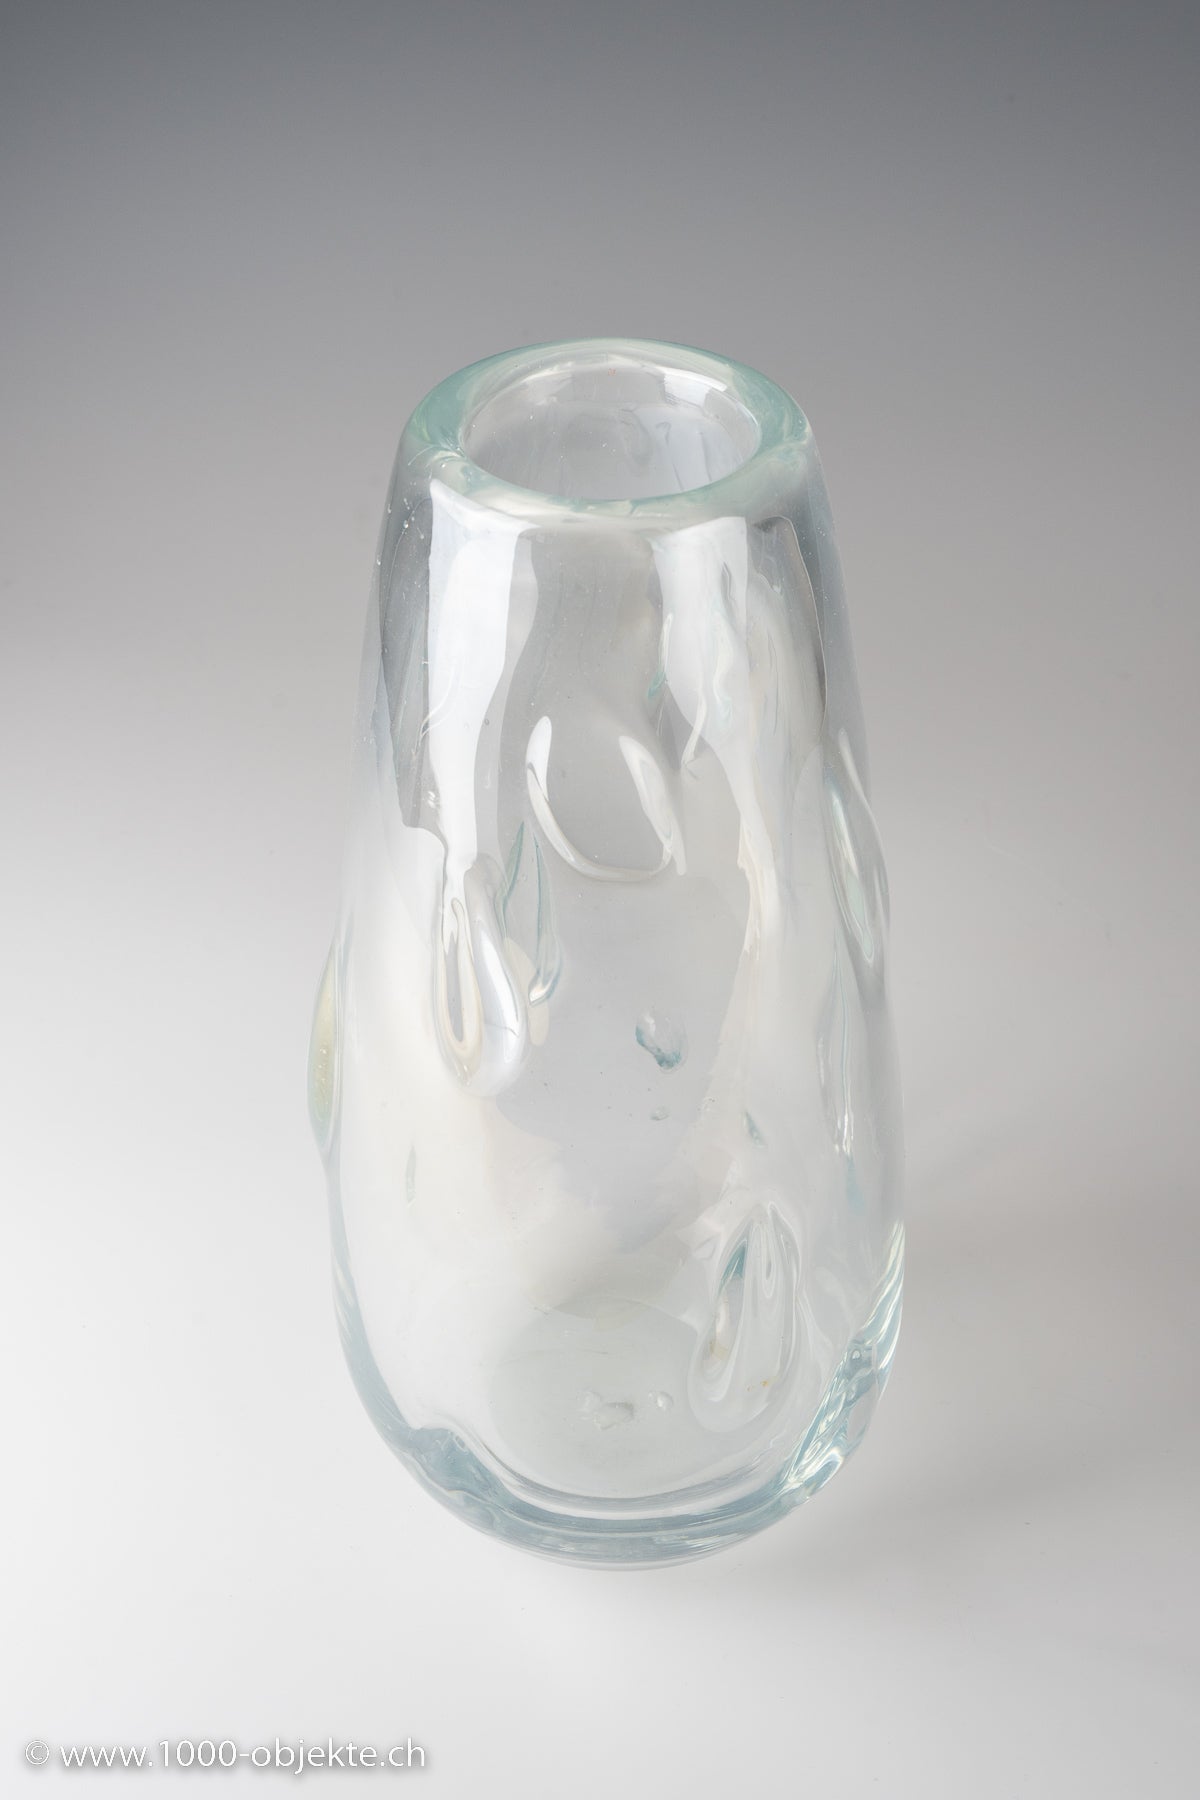 Significant Barovier & Toso Murano Glass Vase ca. 1940 iridescence